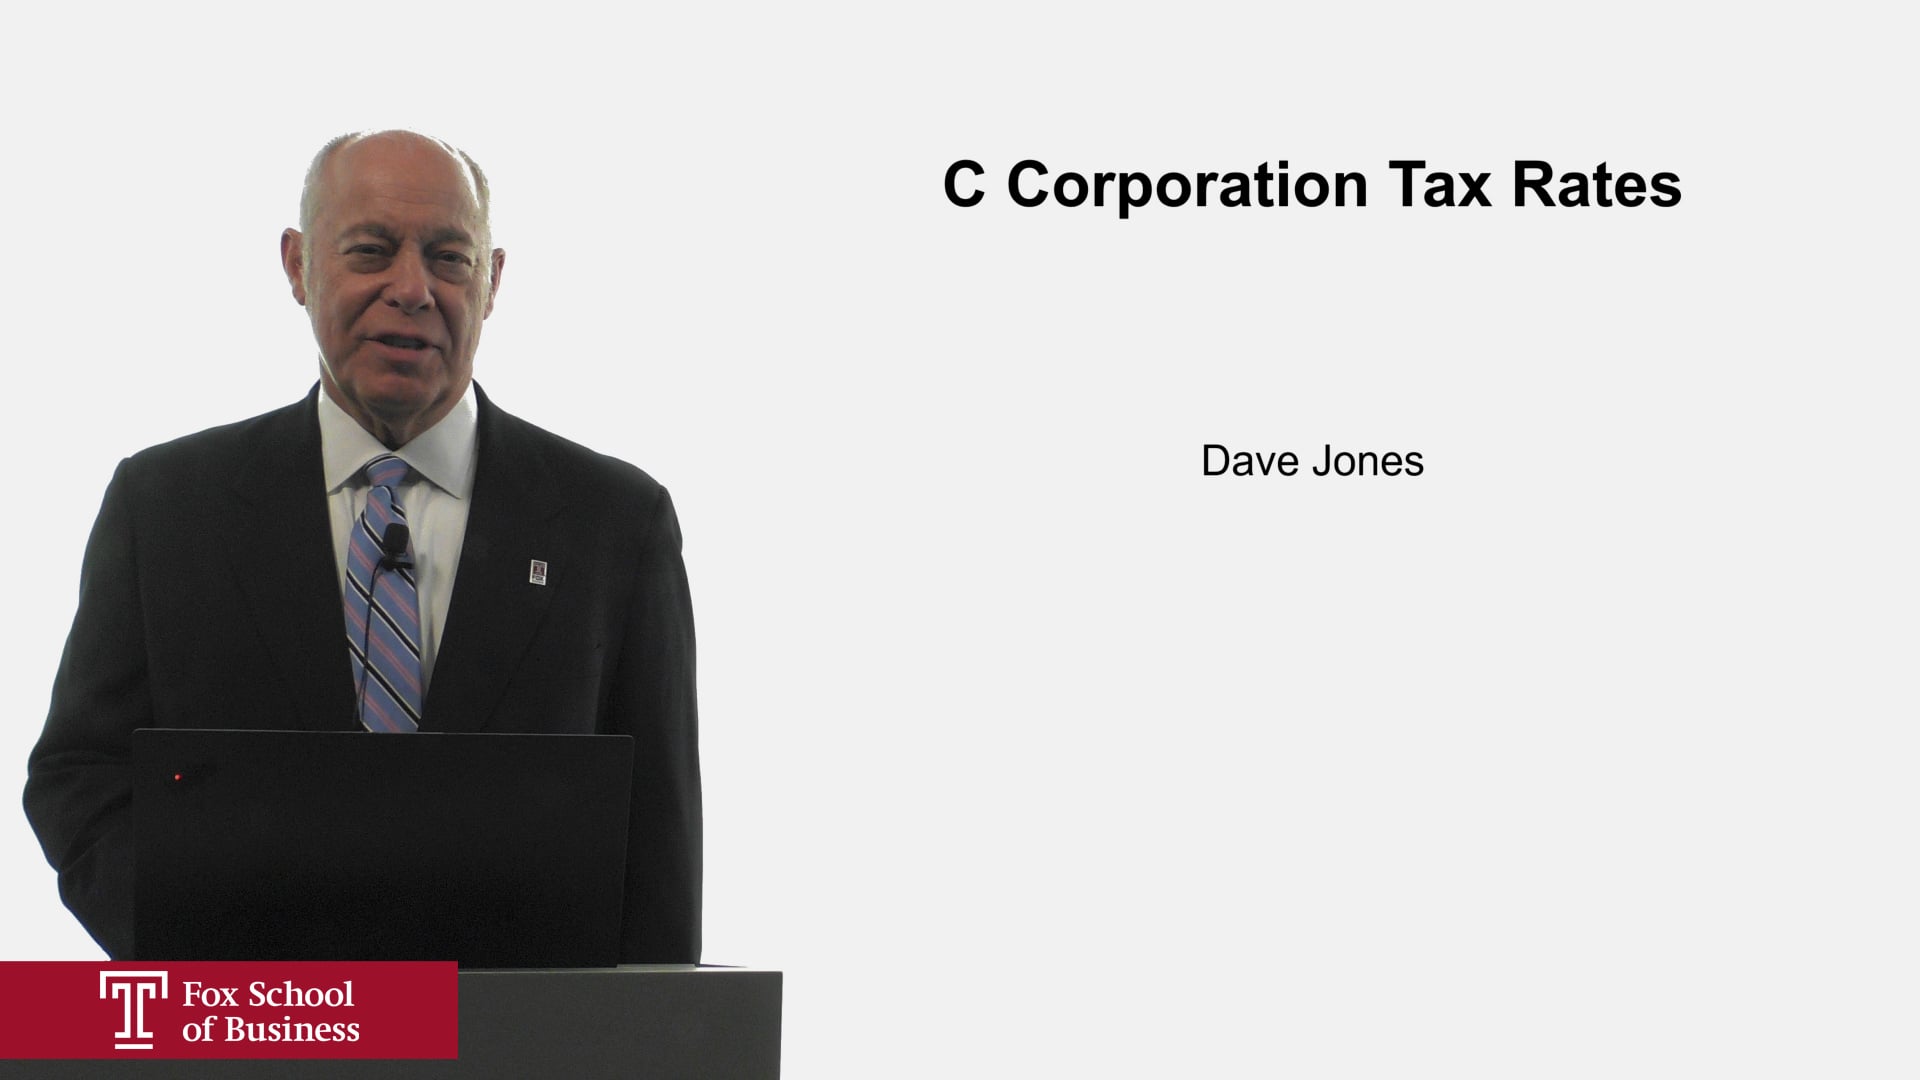 C Corporation Tax Rates